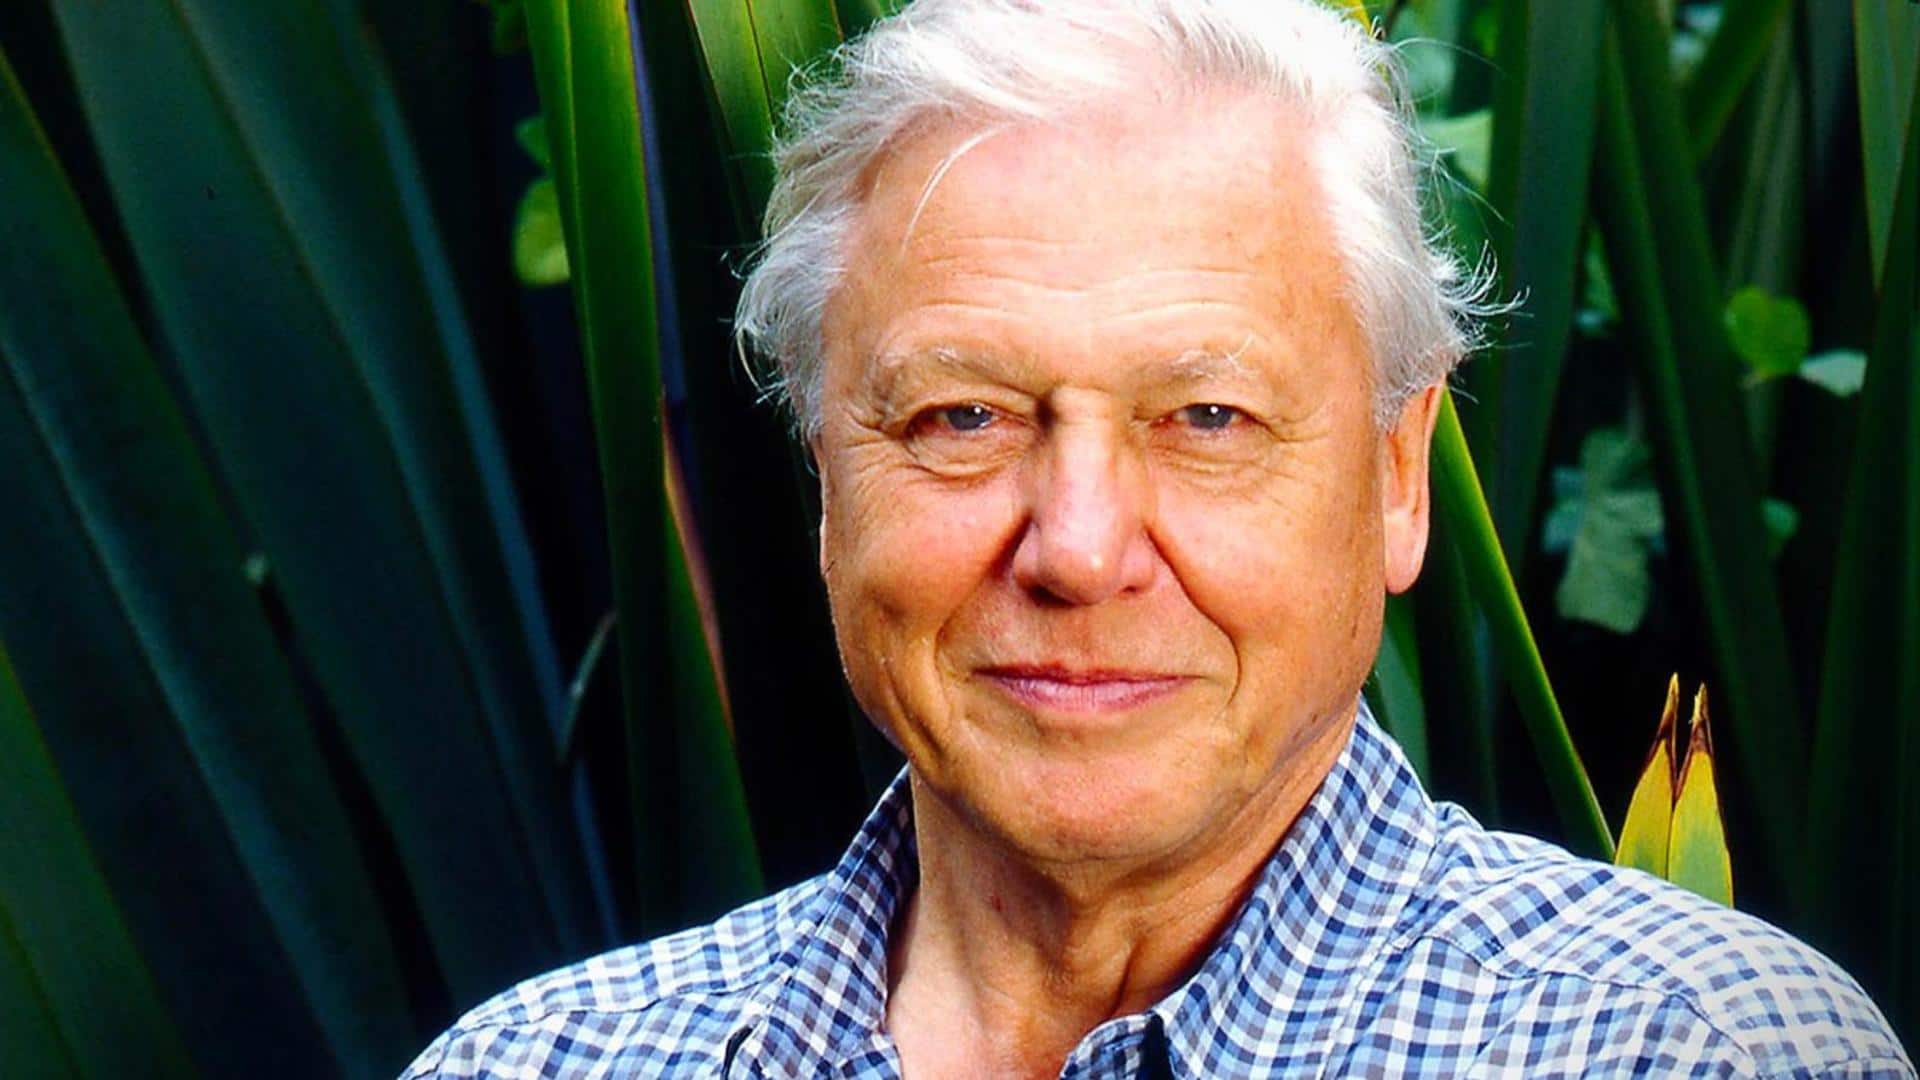 David Attenborough birthday special: 5 must-watch documentaries by natural historian